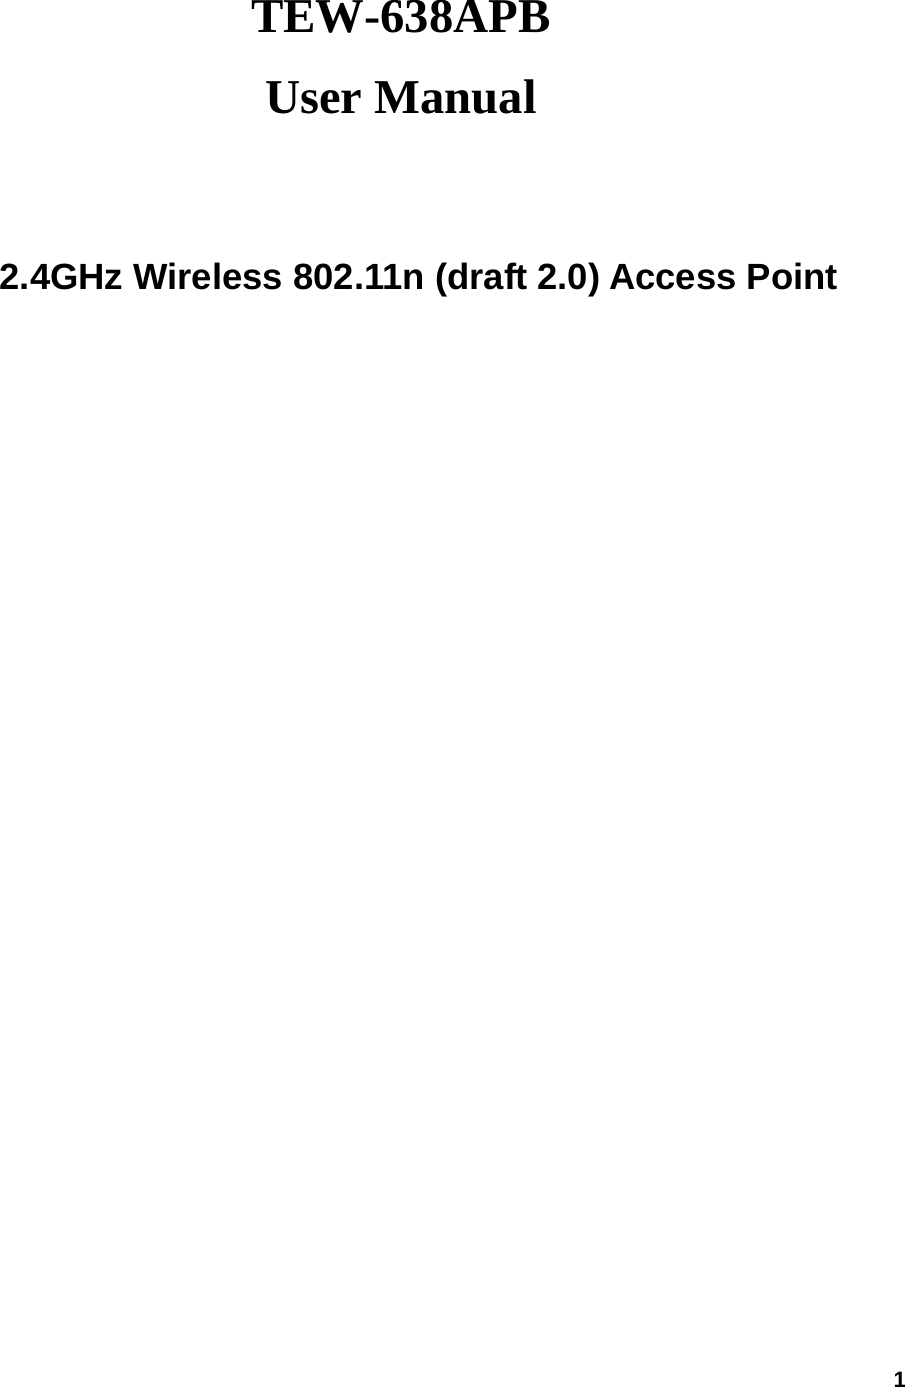 1 TEW-638APB  User Manual  2.4GHz Wireless 802.11n (draft 2.0) Access Point